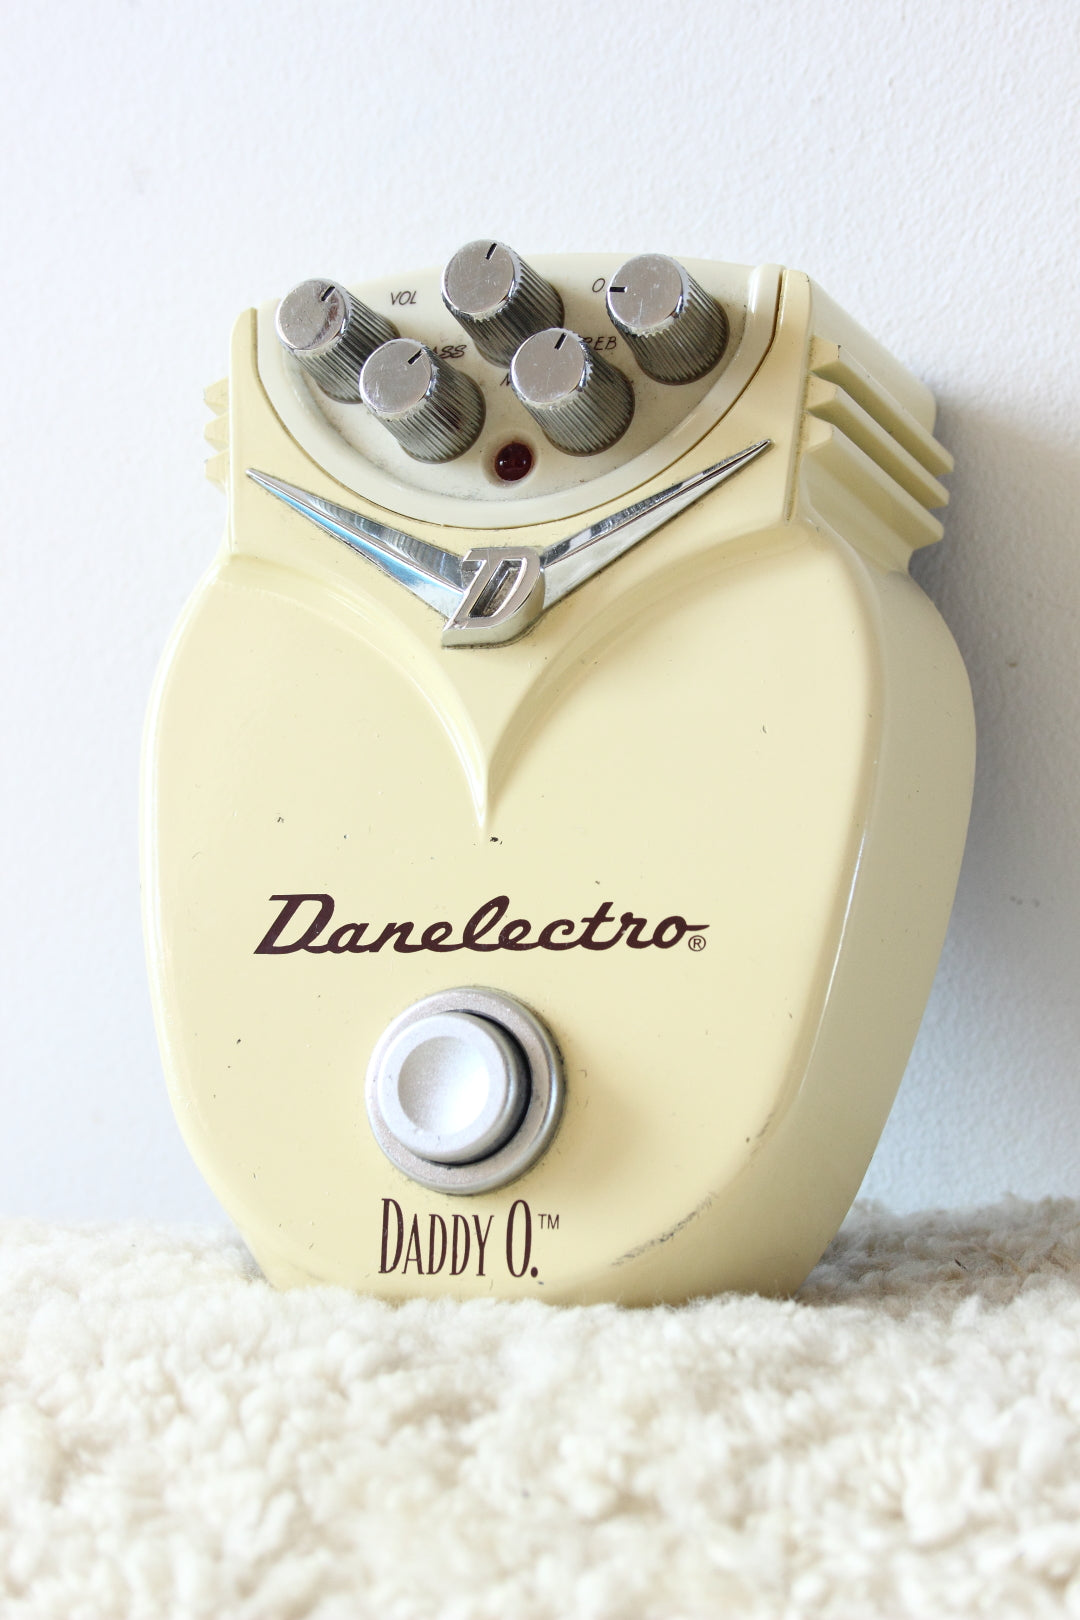 Danelectro Daddy O. - Overdrive